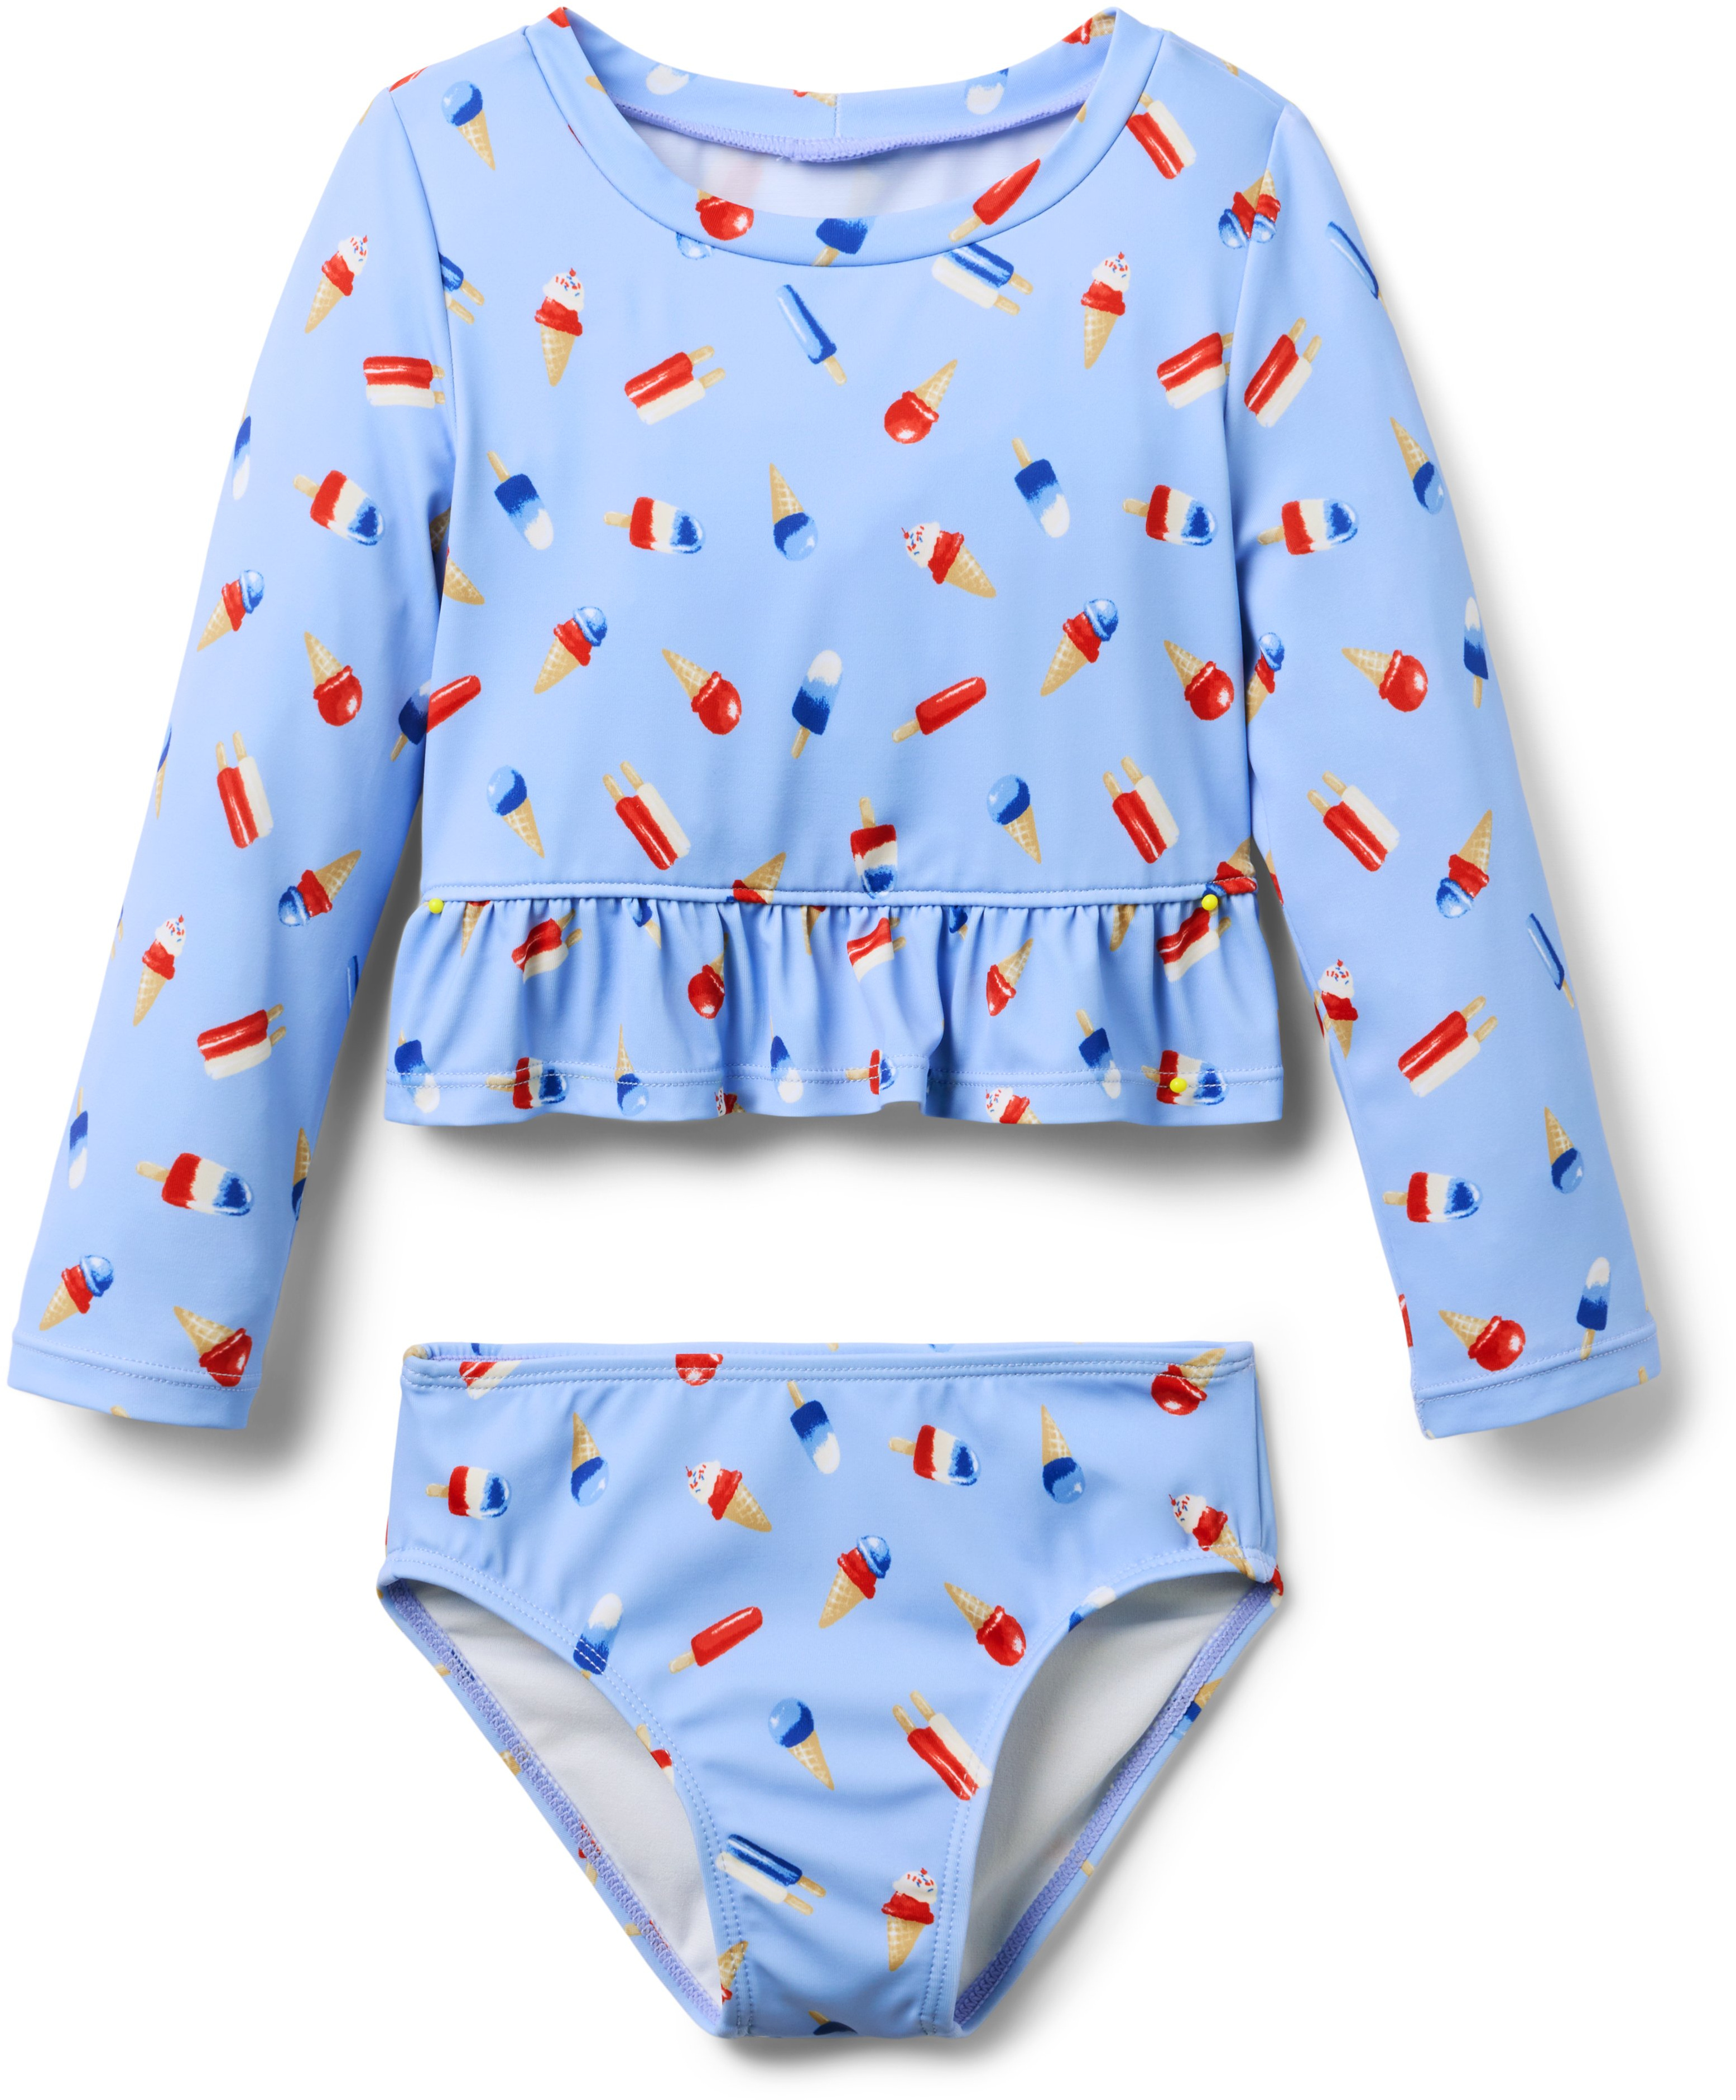 Girls Popsicle Rashguard Swimsuit (Toddler/Little Kid/Big Kid) Janie and Jack